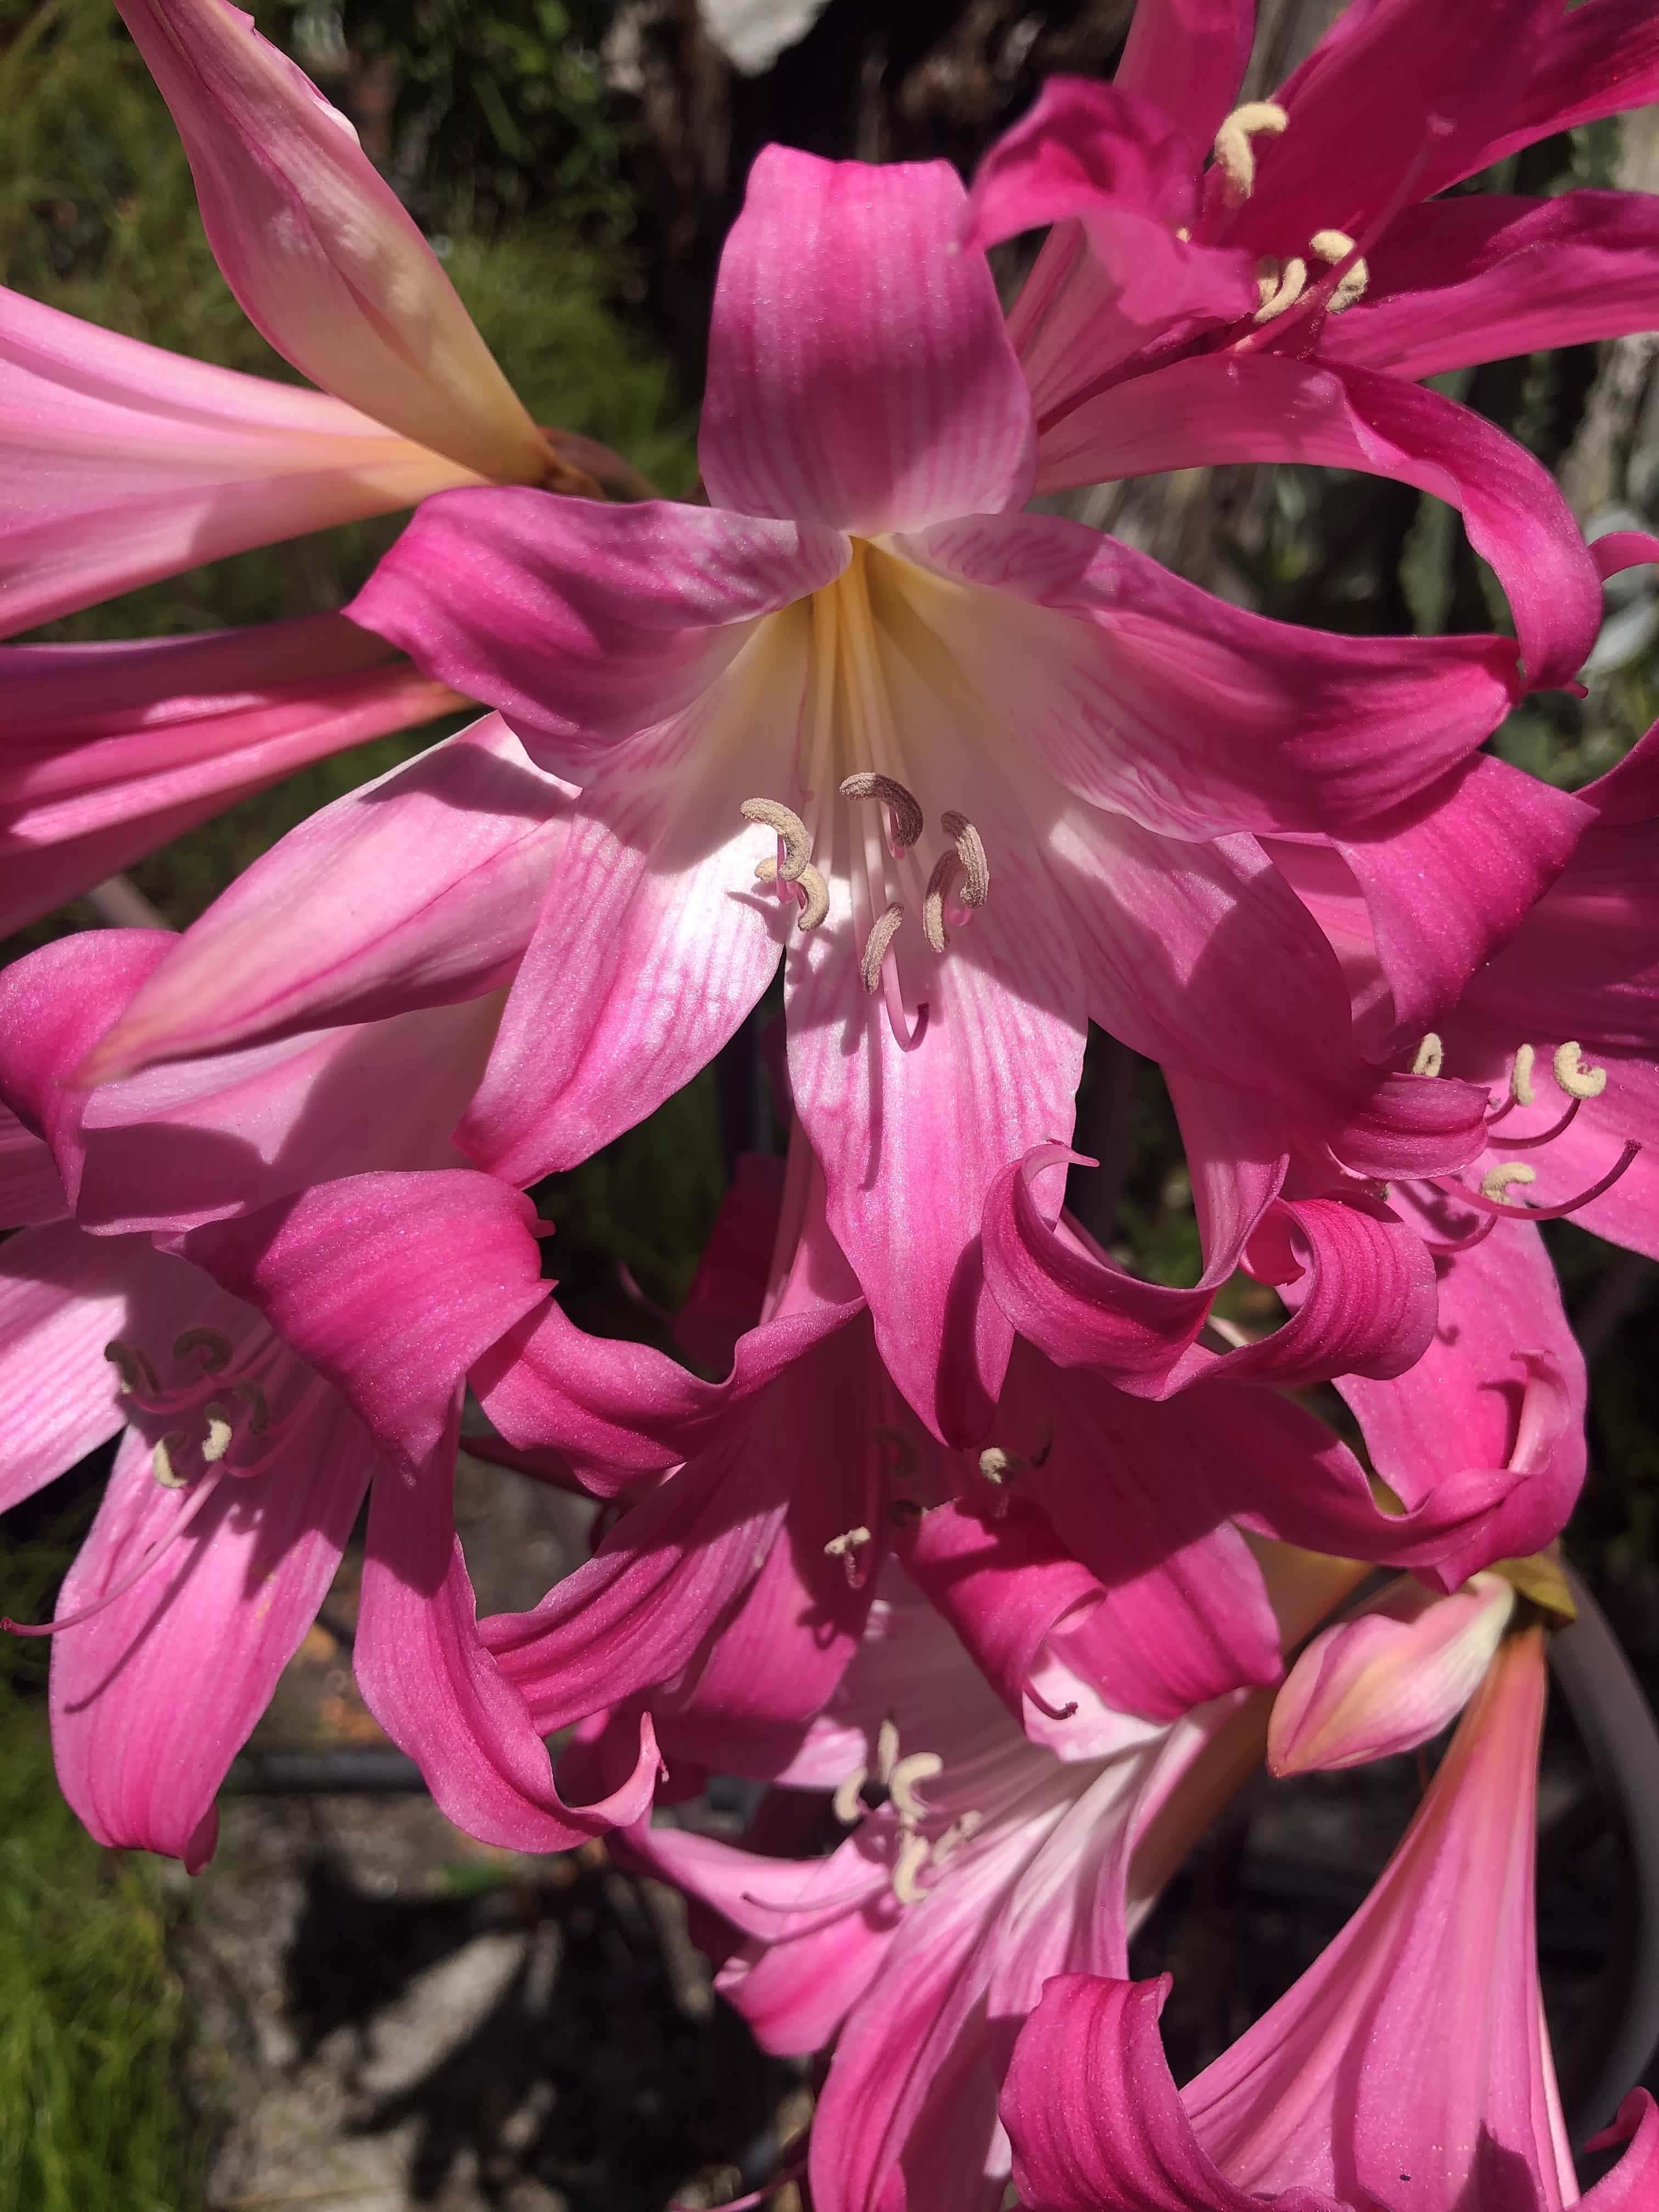 Gambar Gratis Kuncup Bunga Taman Bunga Bunga Bakung Merah Muda Tanaman Karangan Bunga Eceng Gondok Mekar Kelopak Bunga